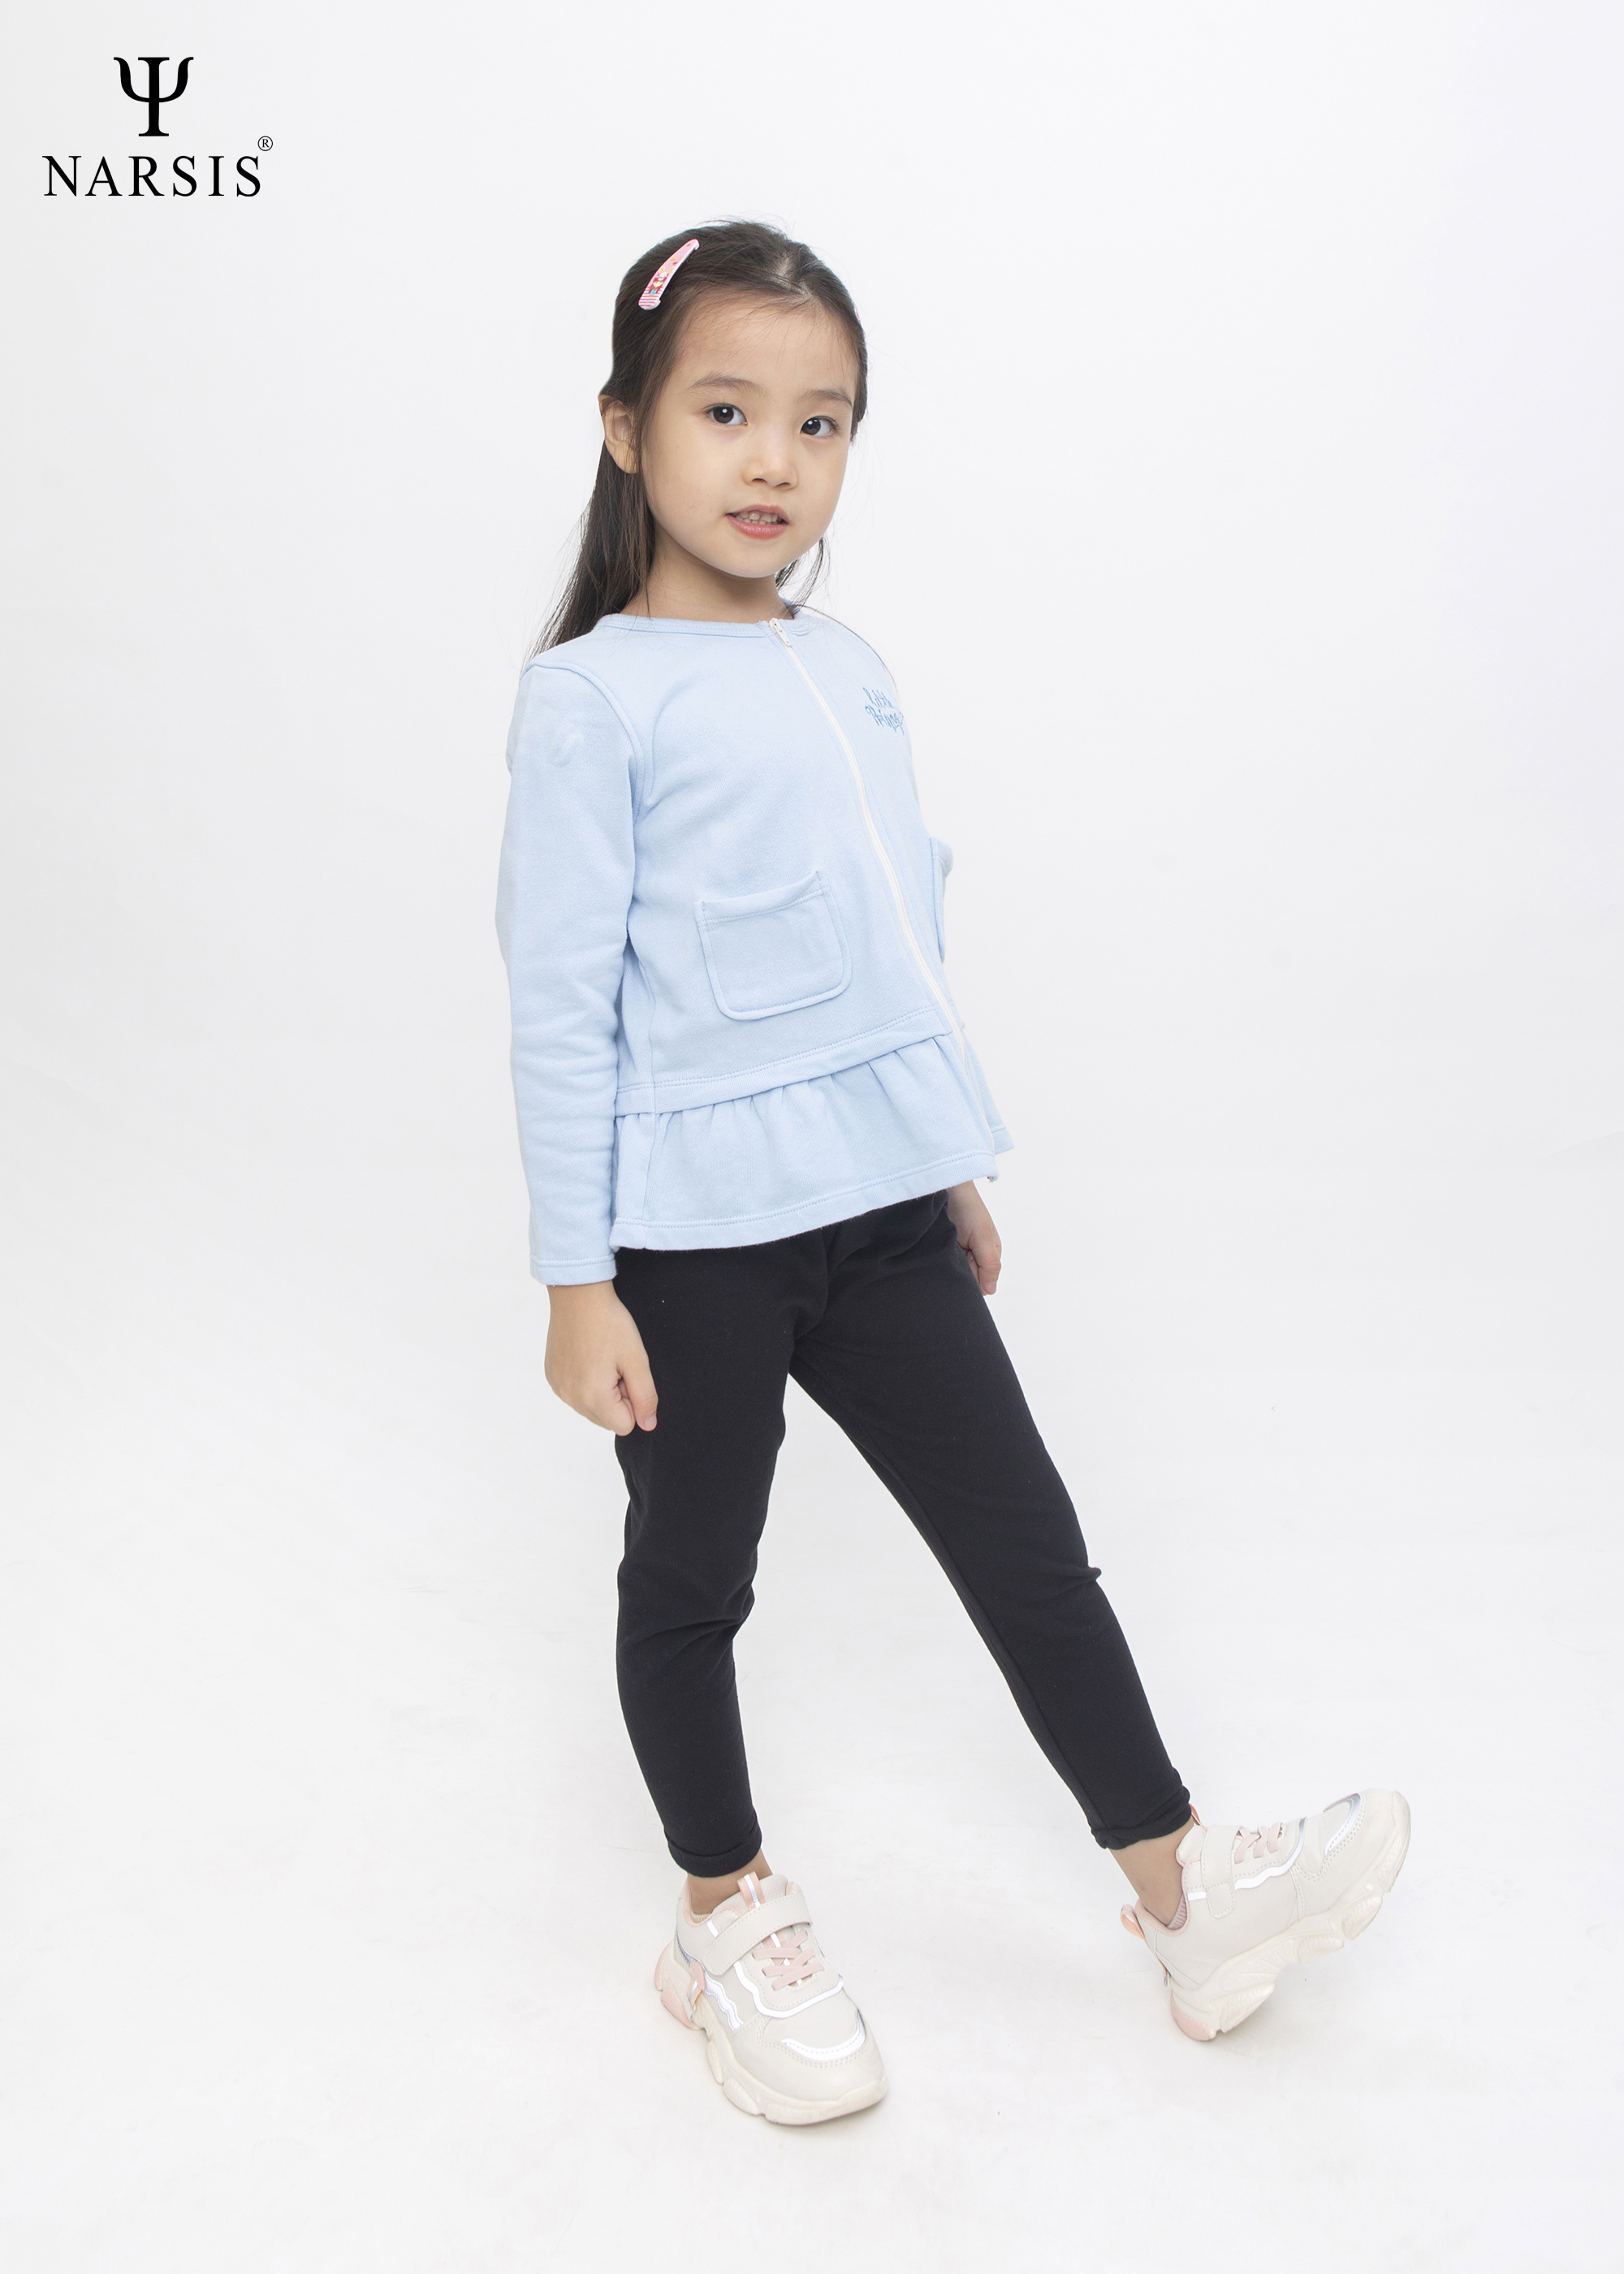 Áo khoác bé gái Narsis KL0005 màu xanh da trời pastel Little Princess